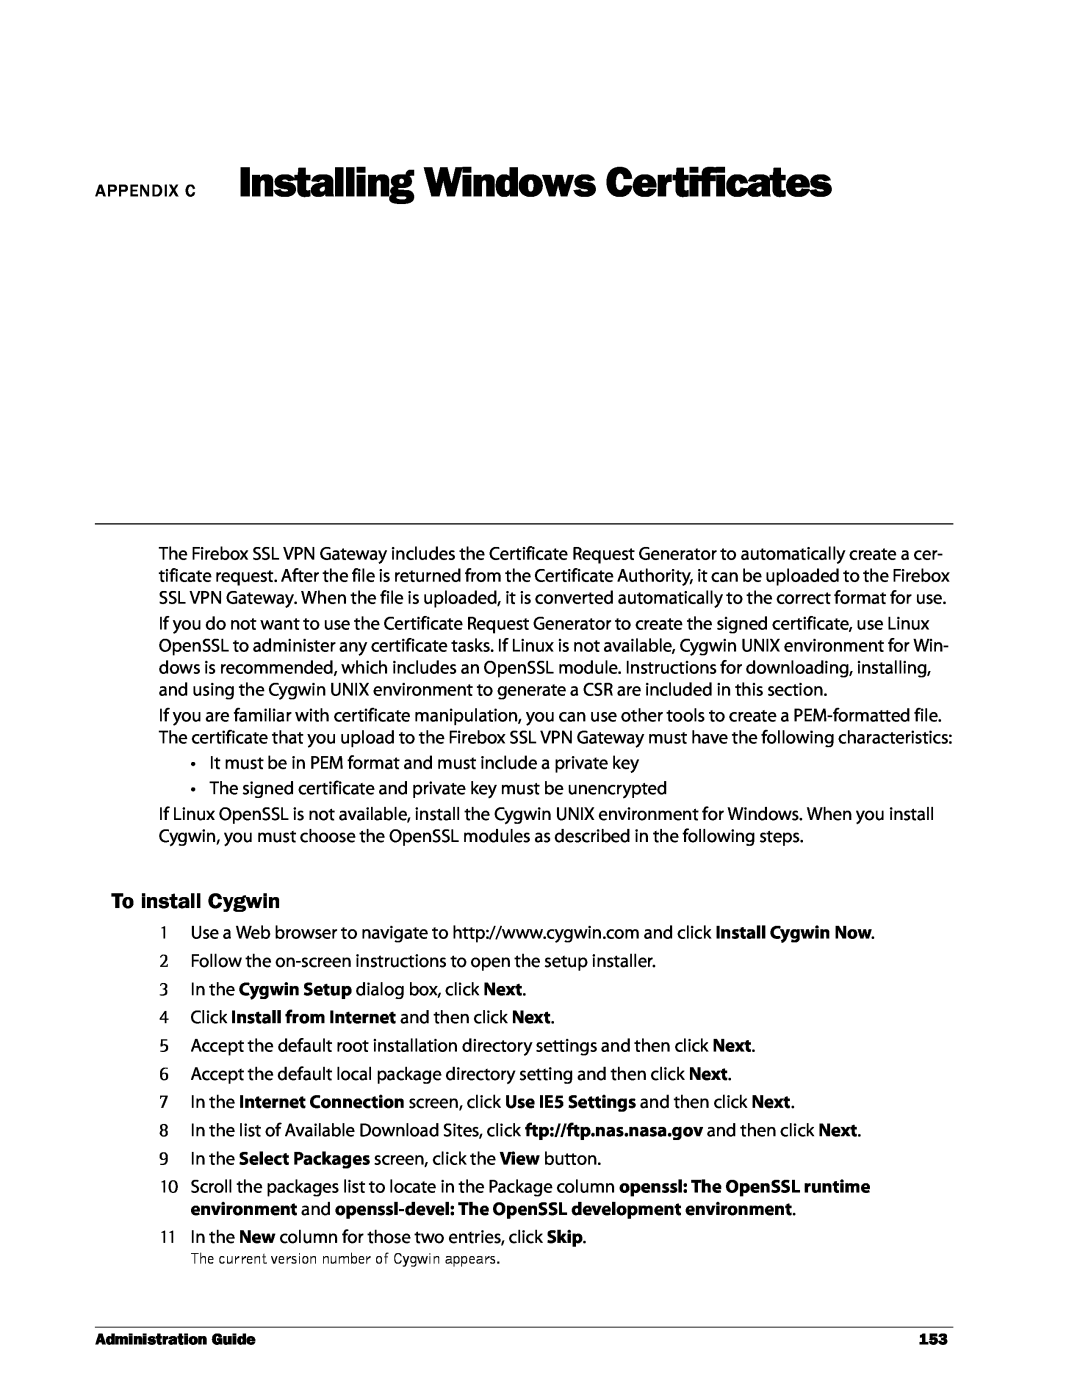 WatchGuard Technologies SSL VPN manual APPENDIX C Installing Windows Certificates, To install Cygwin 